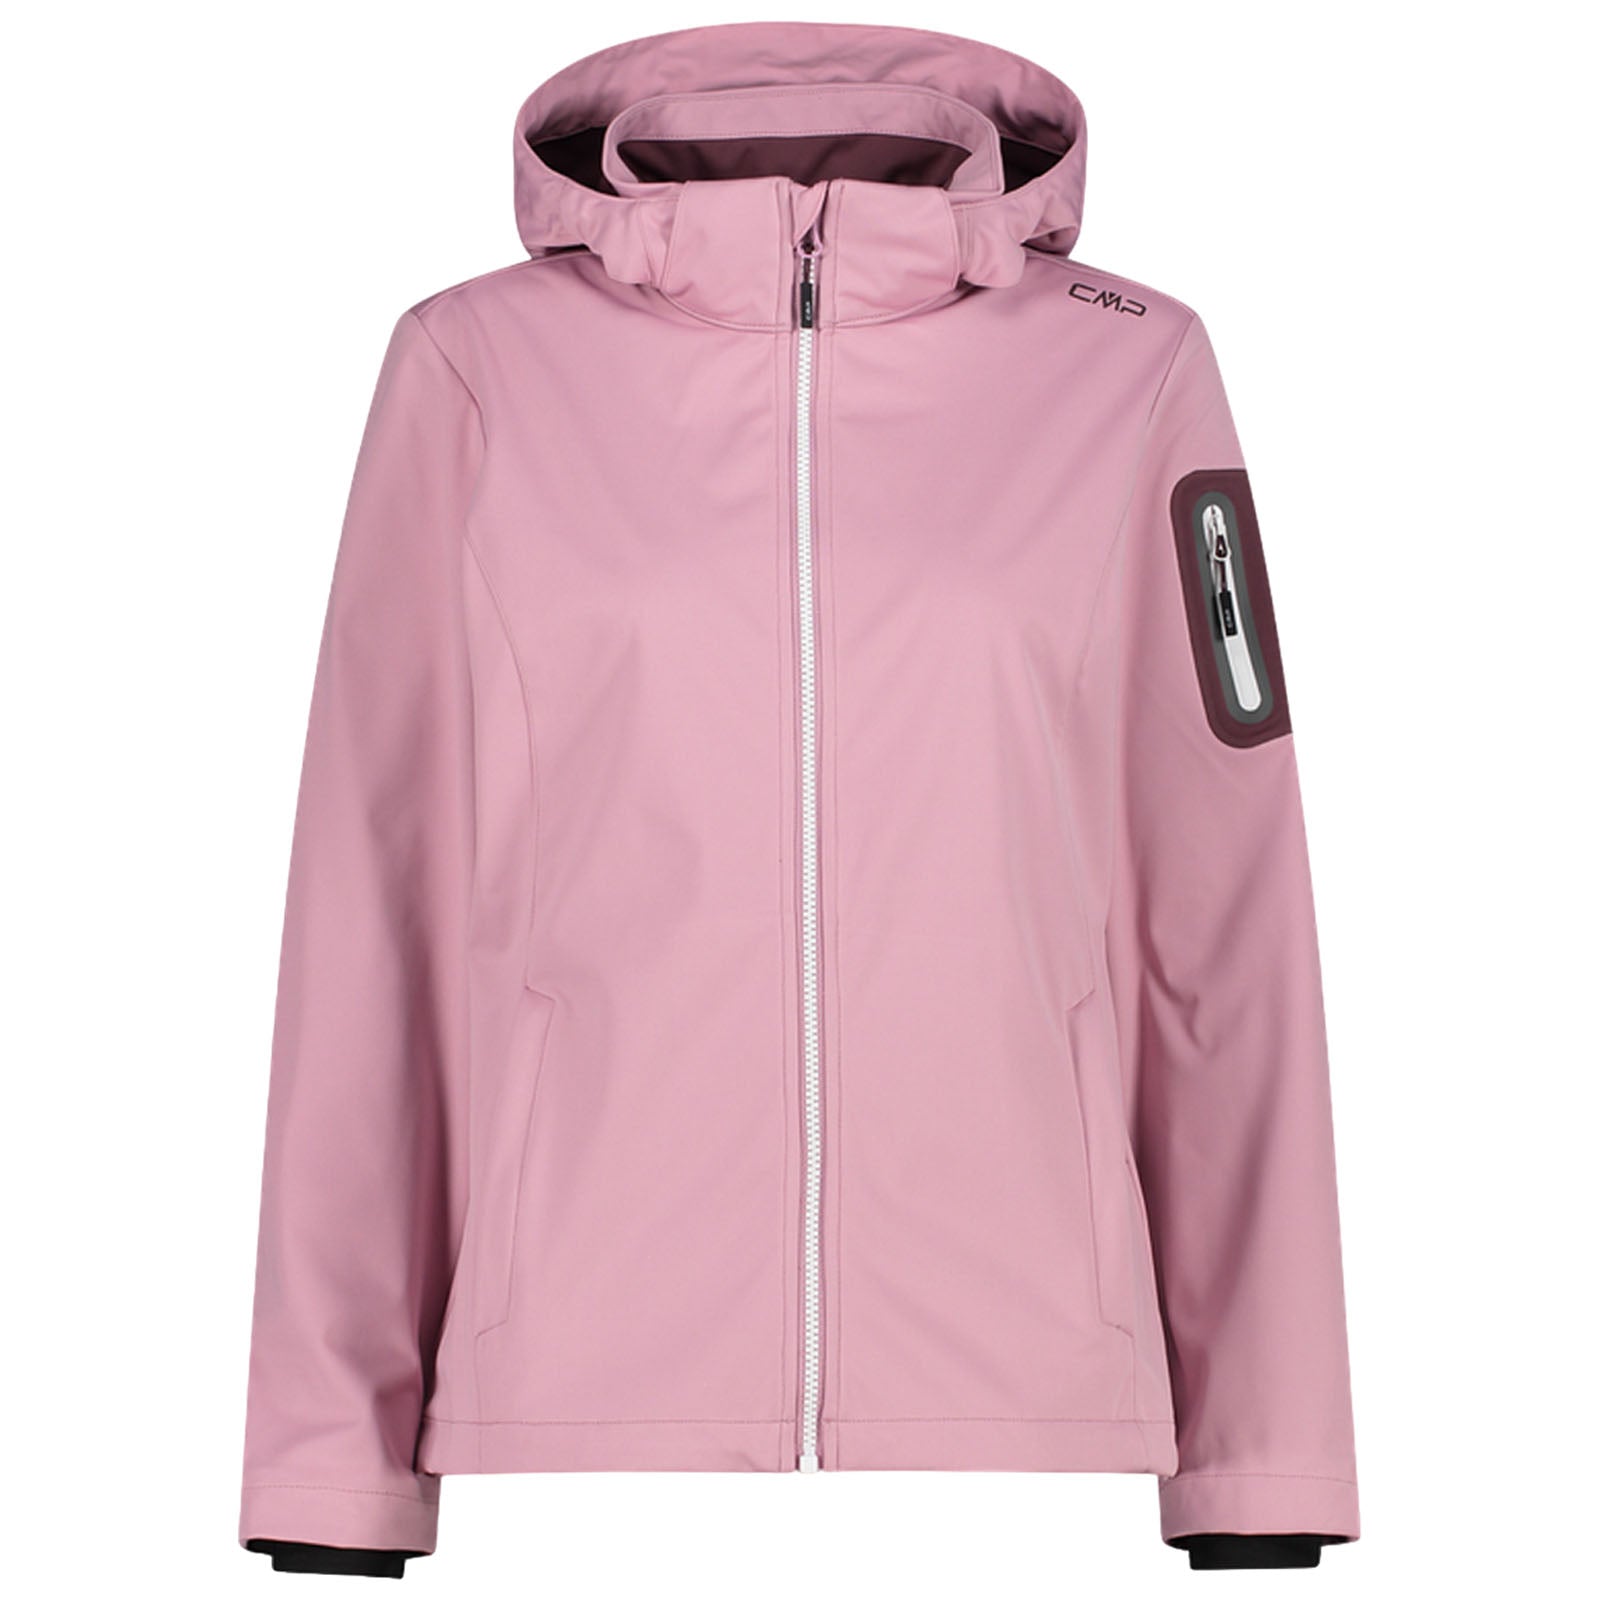 CMP Ladies Light Softshell Sports Jacket – Fleece More